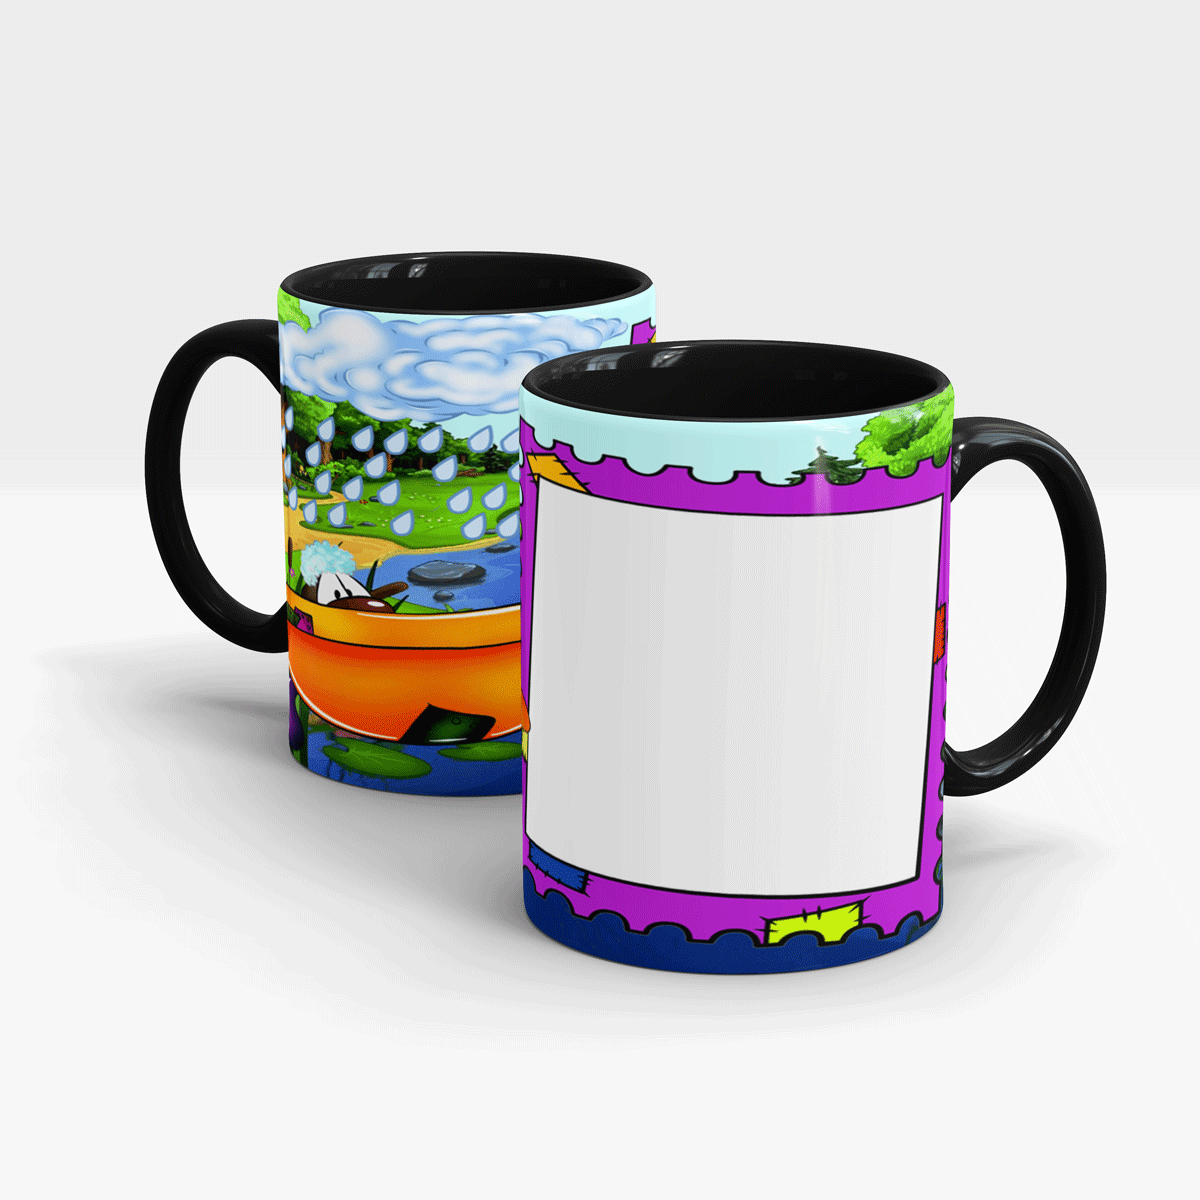 Custom Printed Mug for Kids - Design Your Own